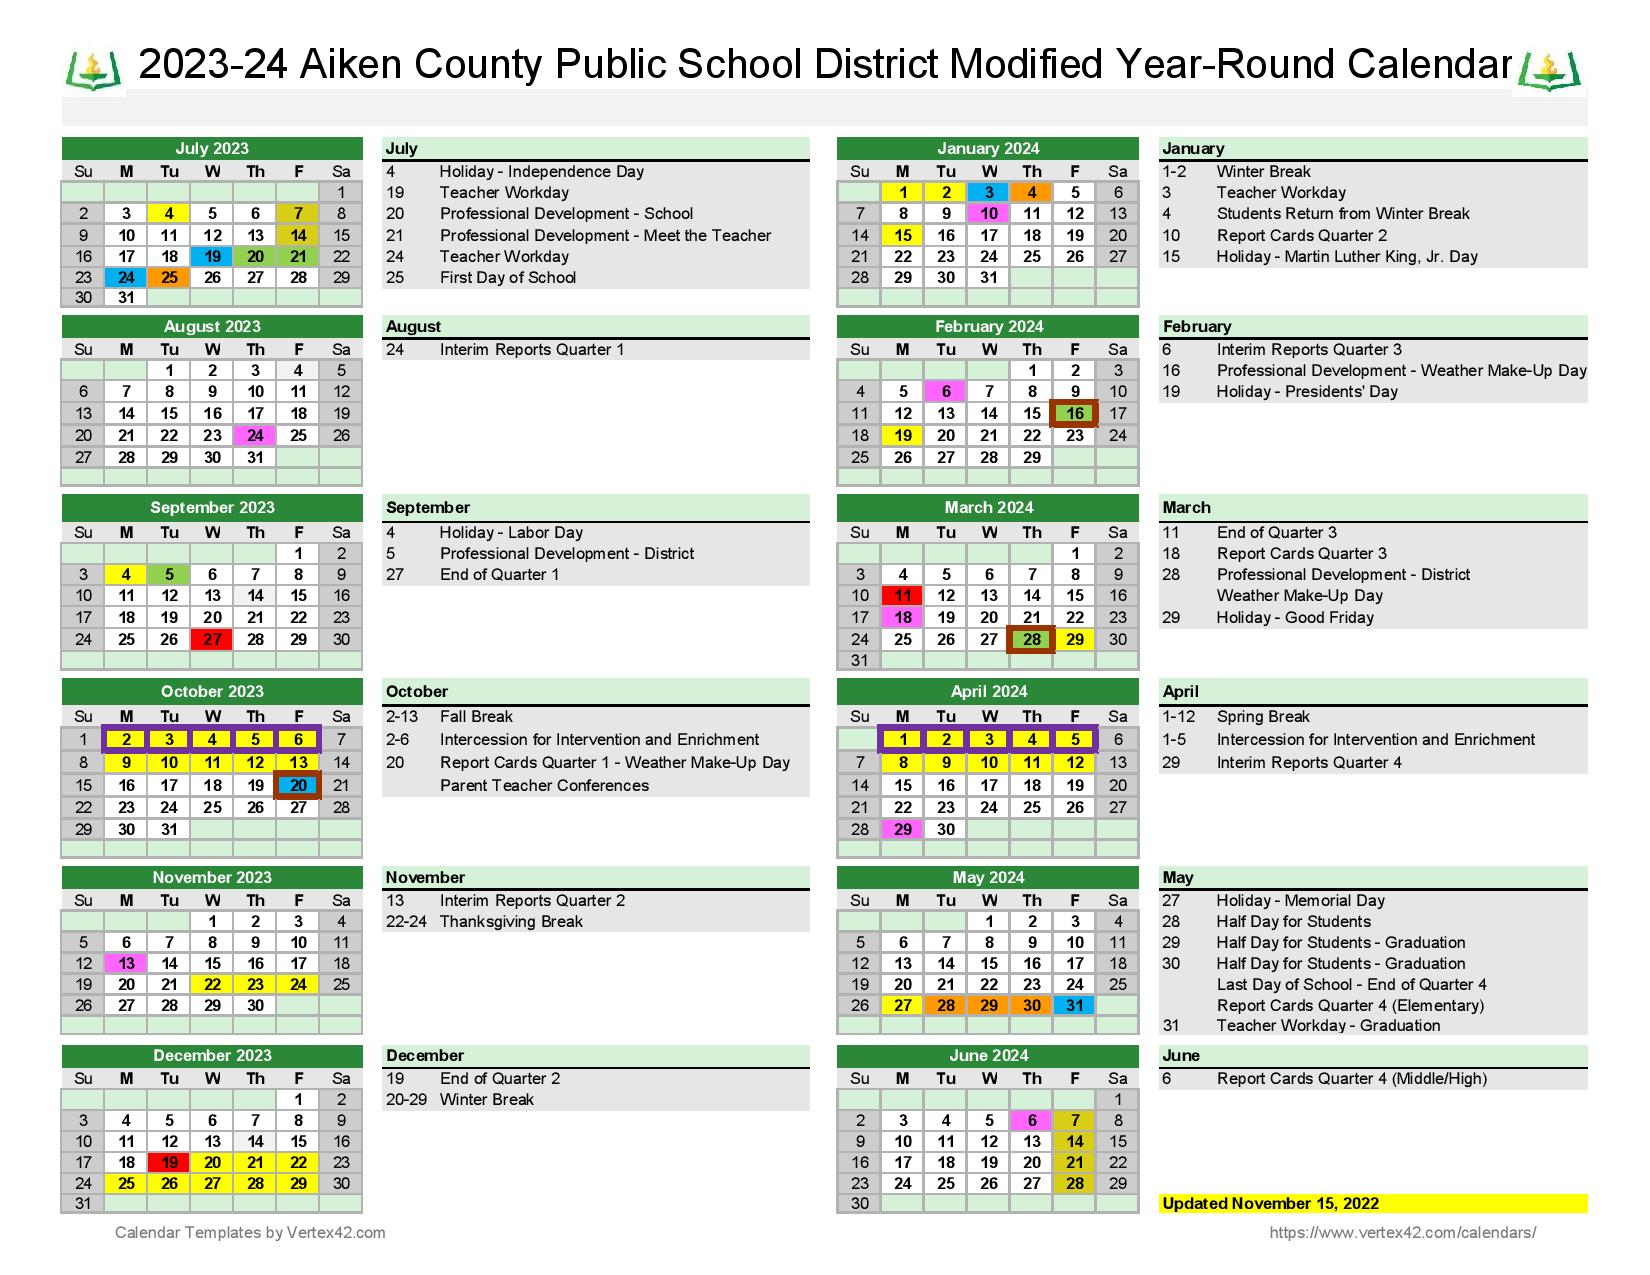 Aiken County Public Schools Calendar 20232024 in PDF